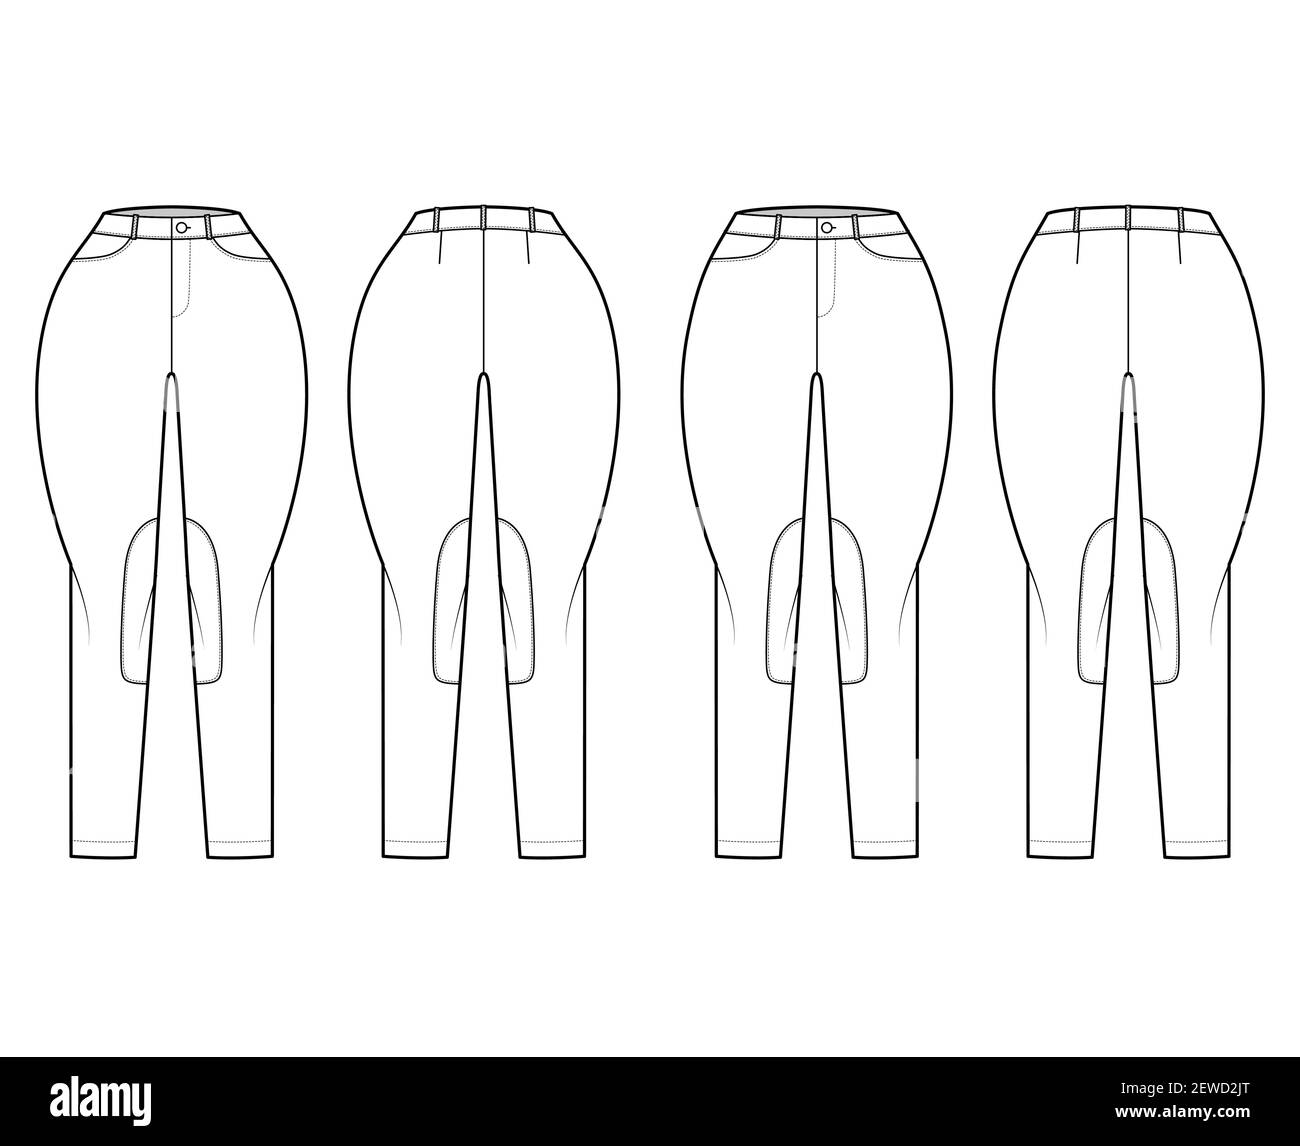 Set of Jeans Classic Jodhpurs Denim pants technical fashion ...